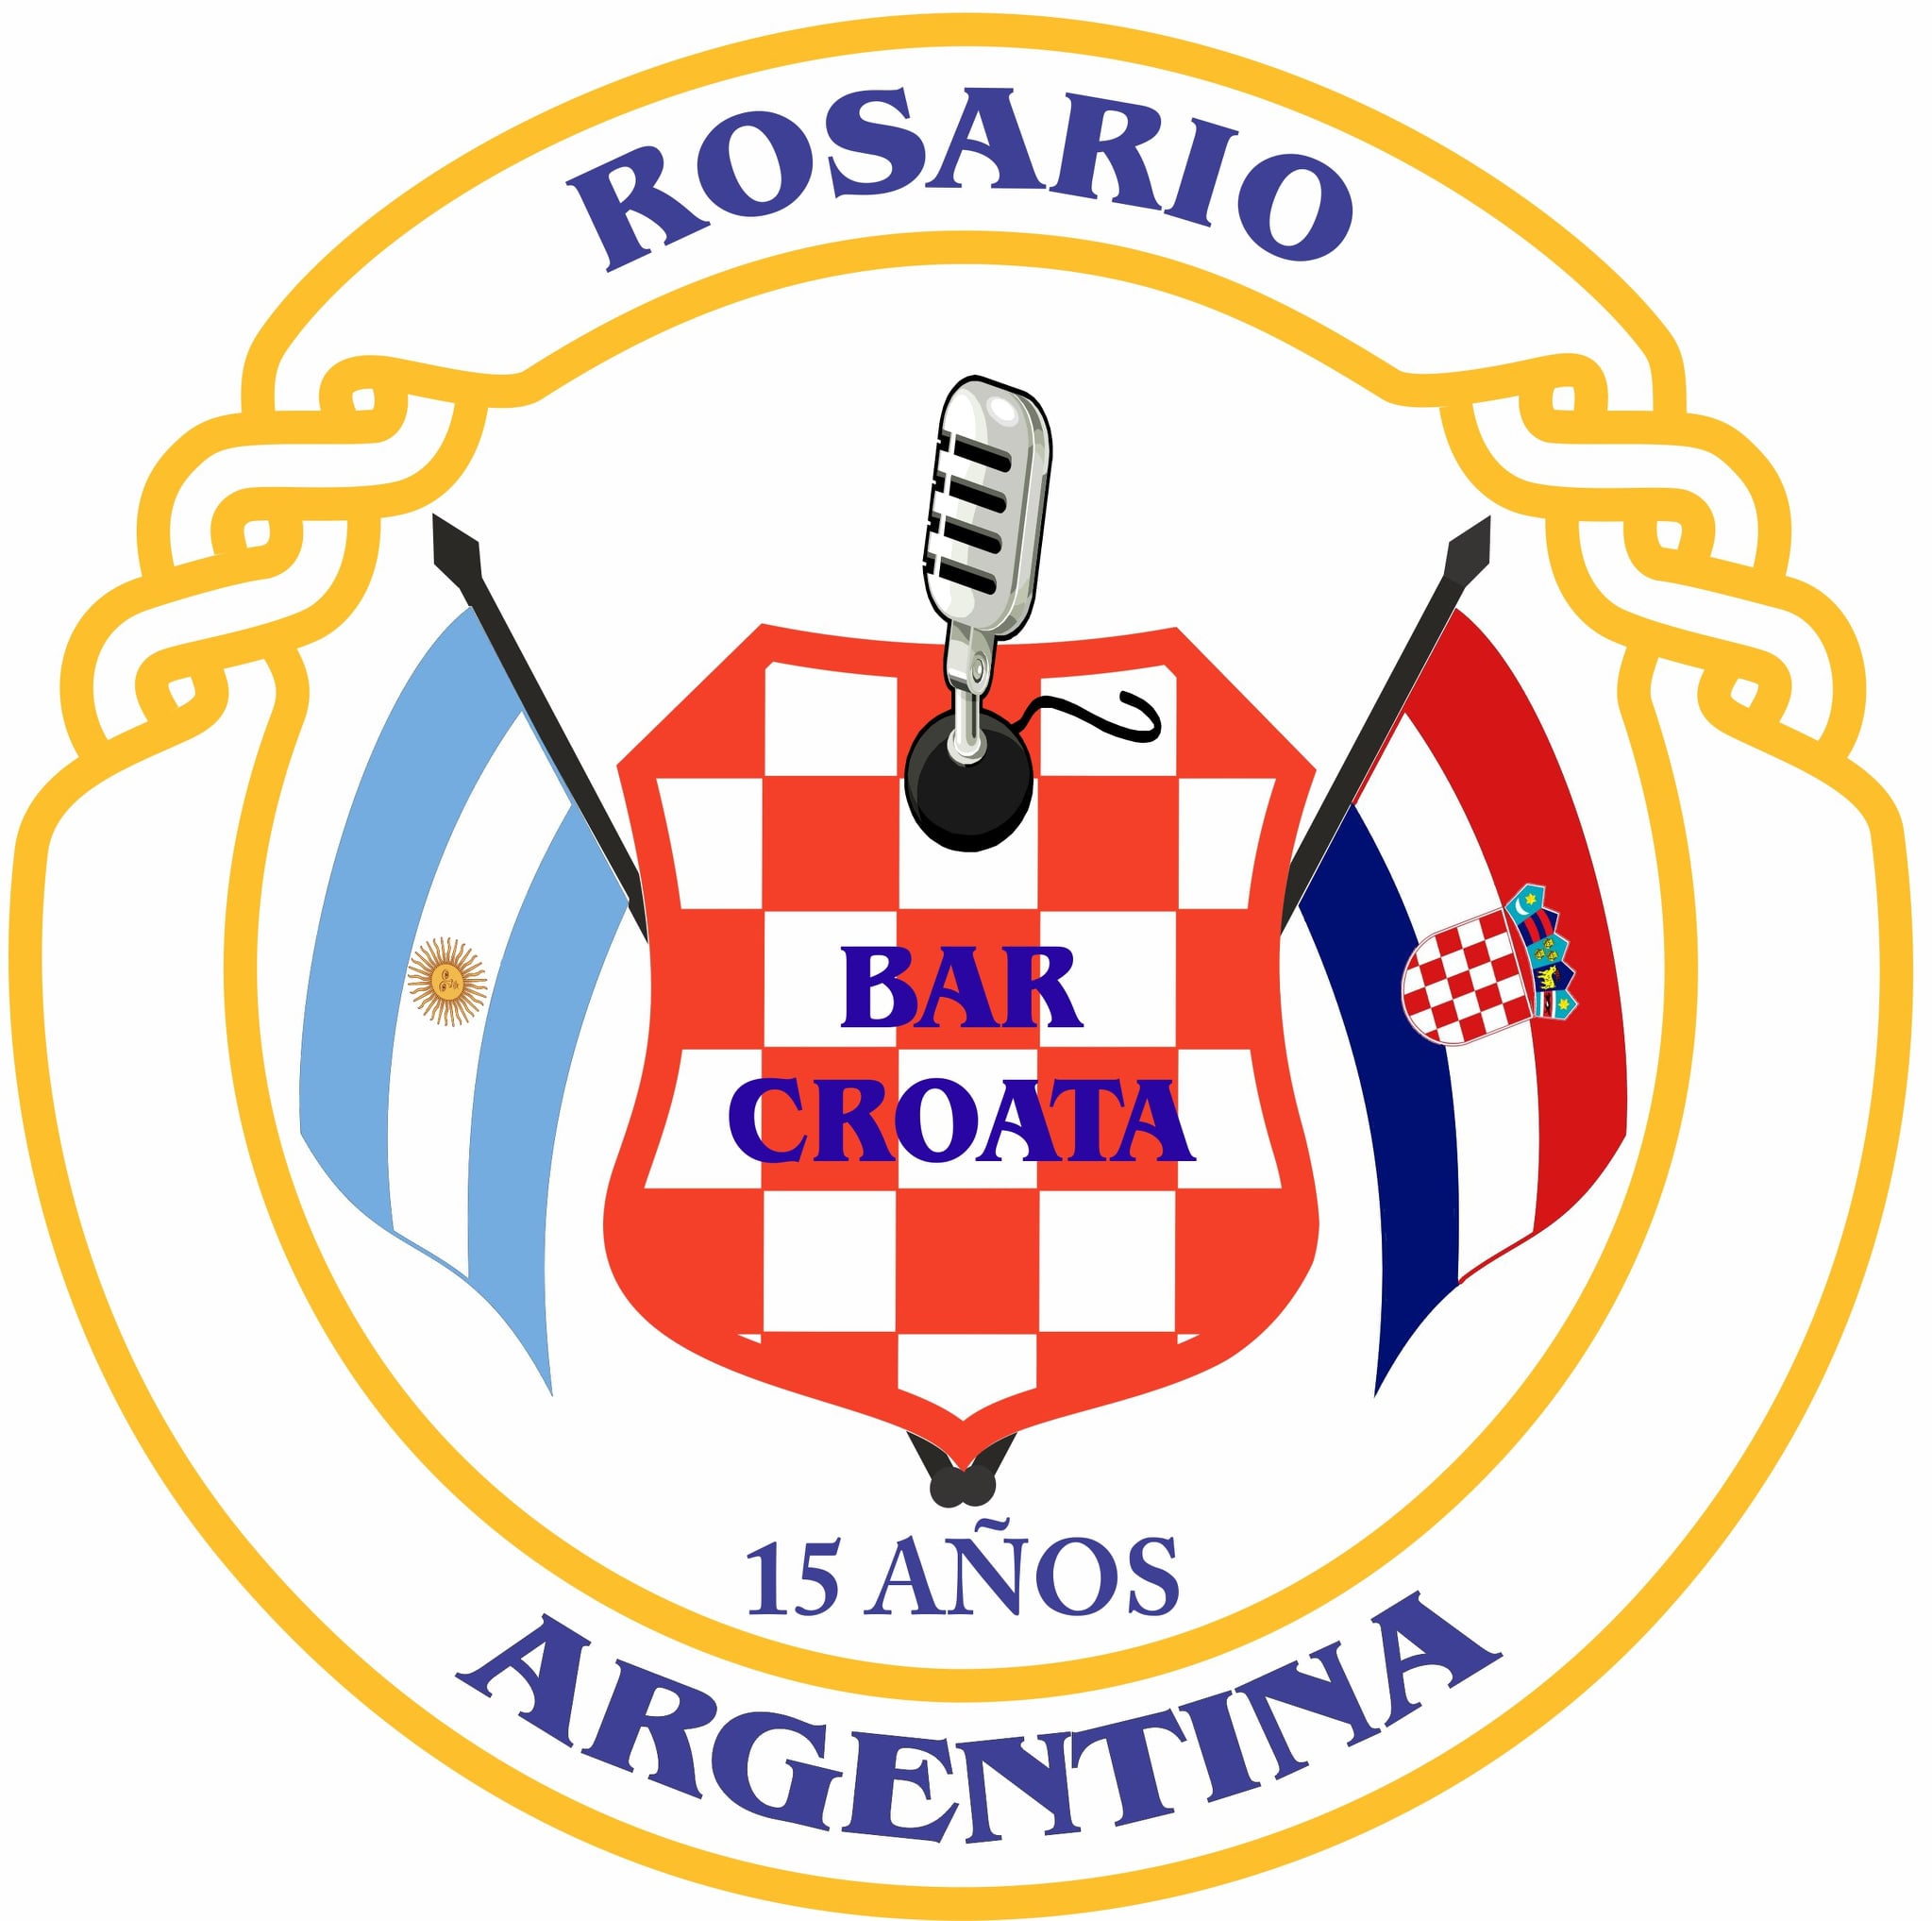 Croatian radio show Bar Croata in Argentina celebrates 15 years 